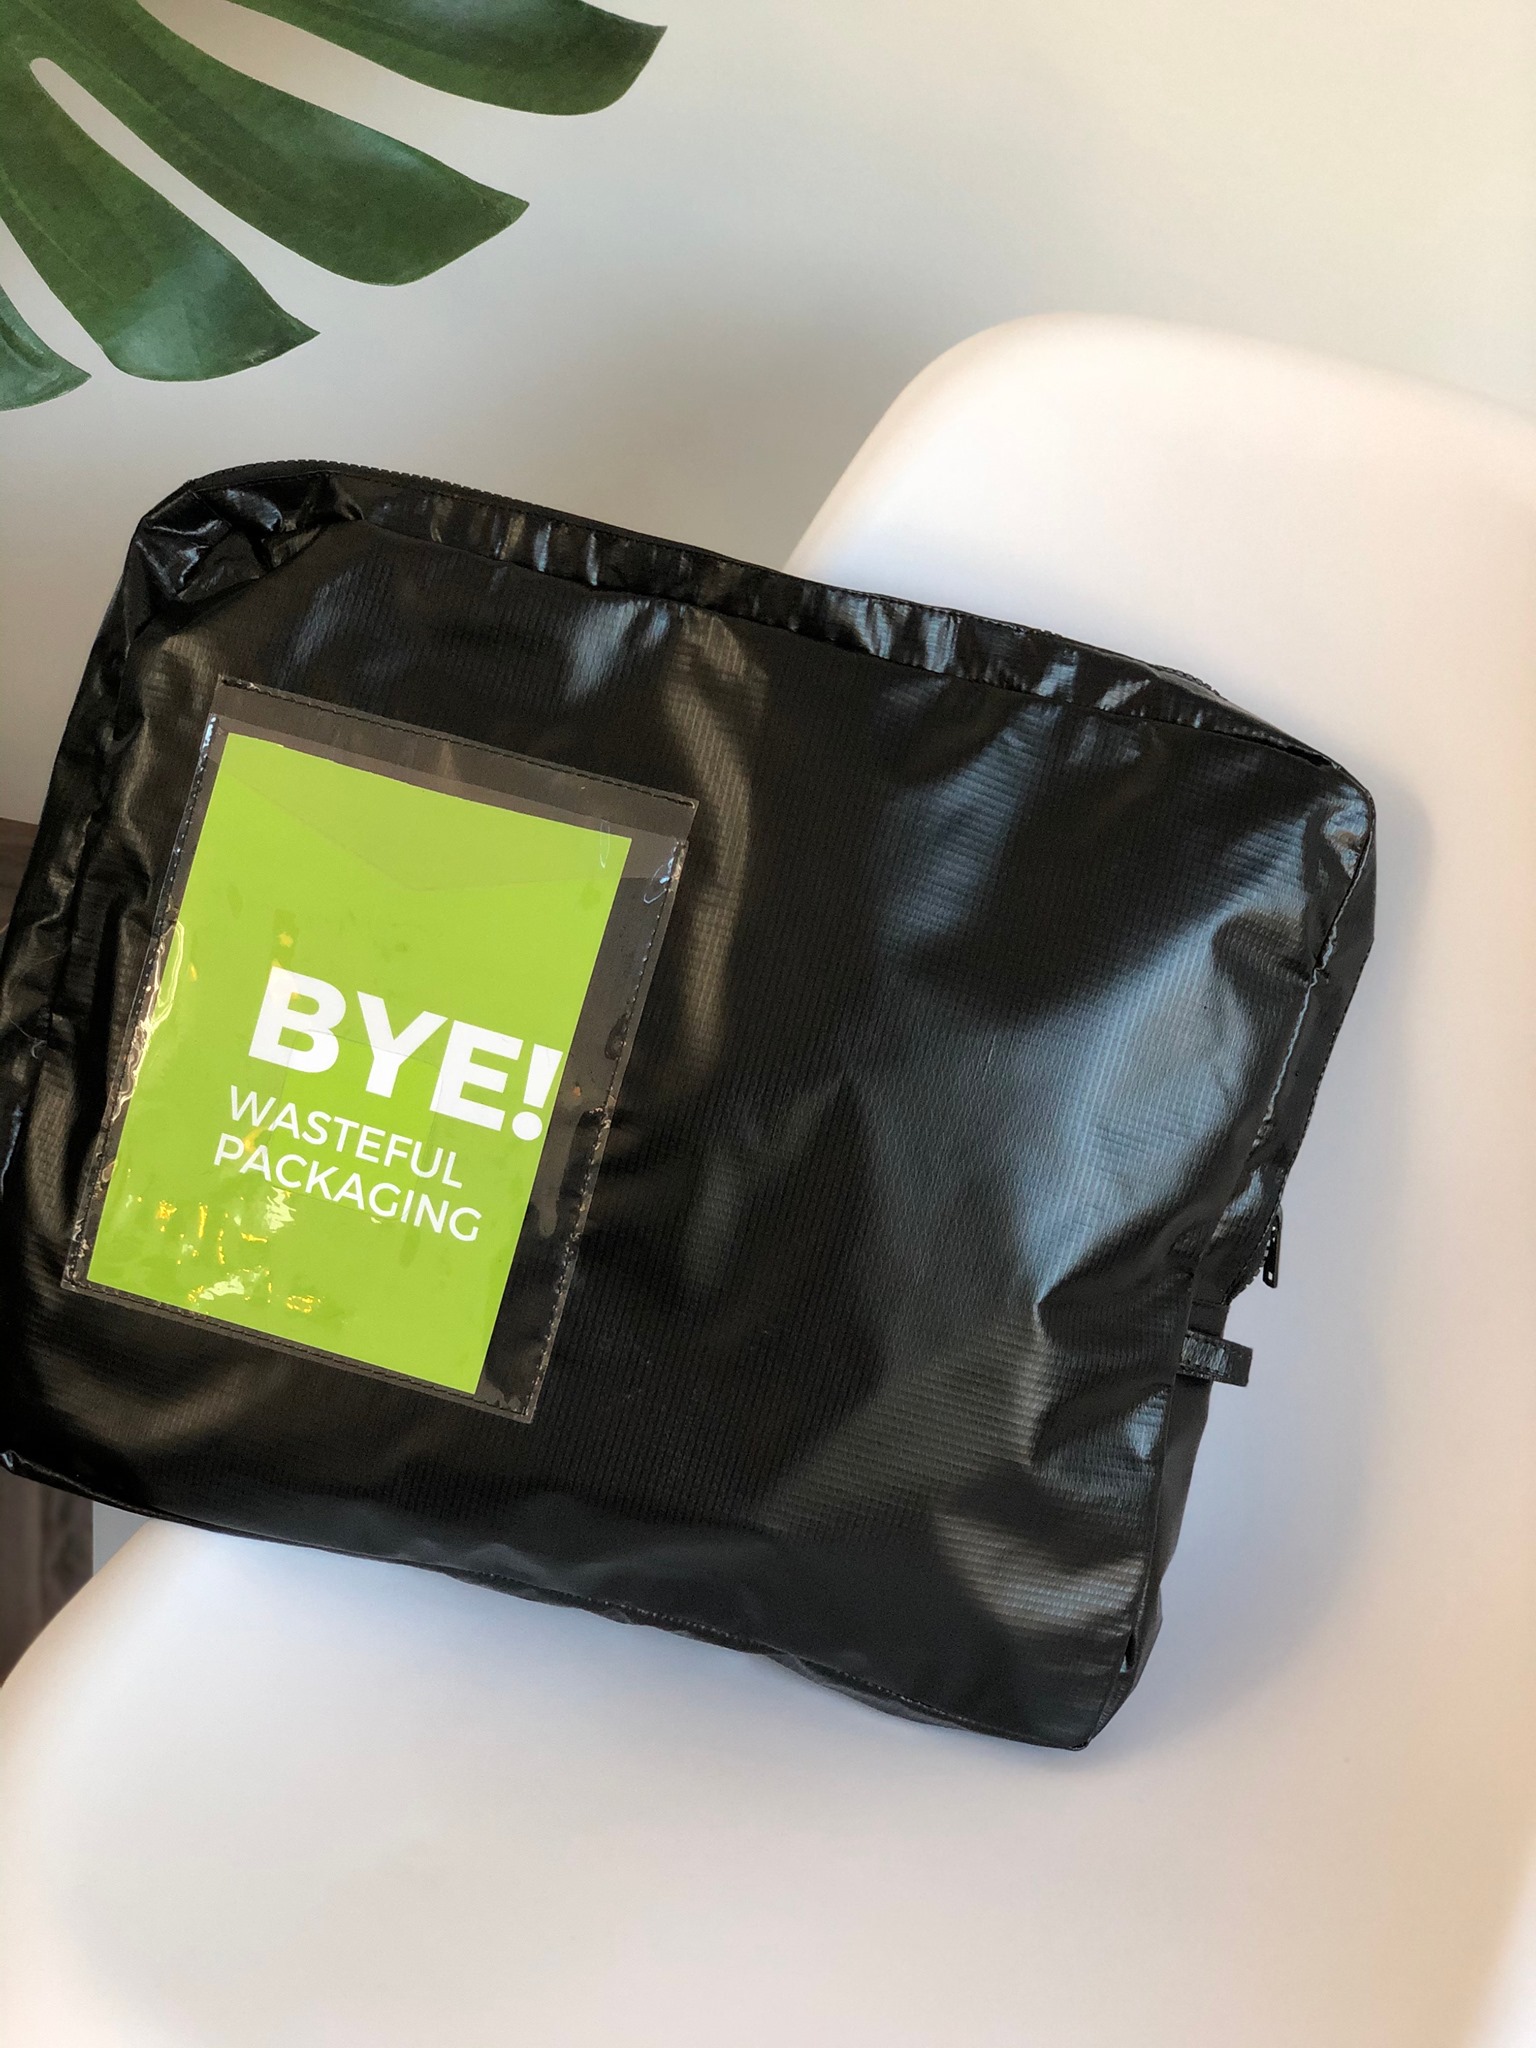 LimeLoop Finds Niche, Overcomes Setbacks to Deliver Reusable Packaging